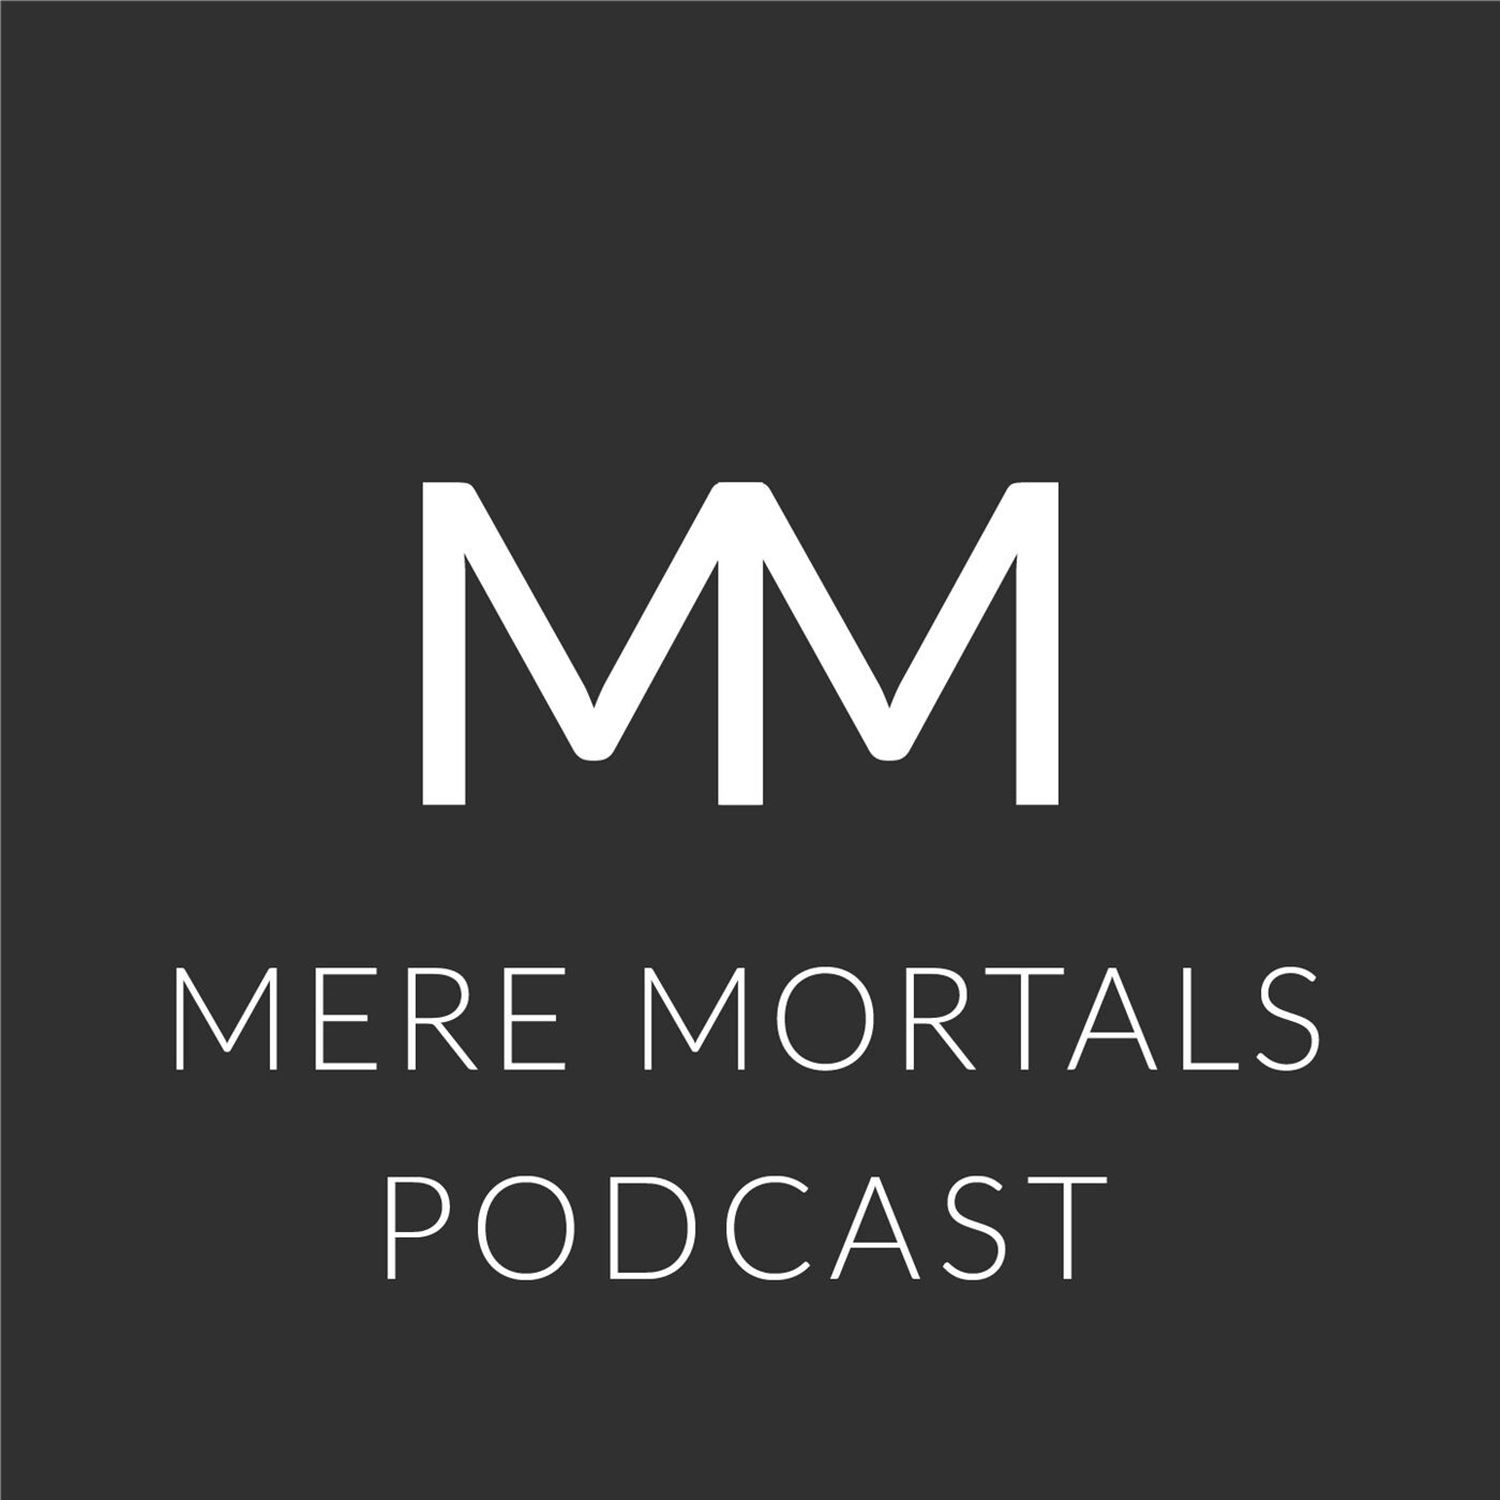 Where Should One Direct Their Effort? (Mere Mortals Episode #65 - Effective Vs Efficient)